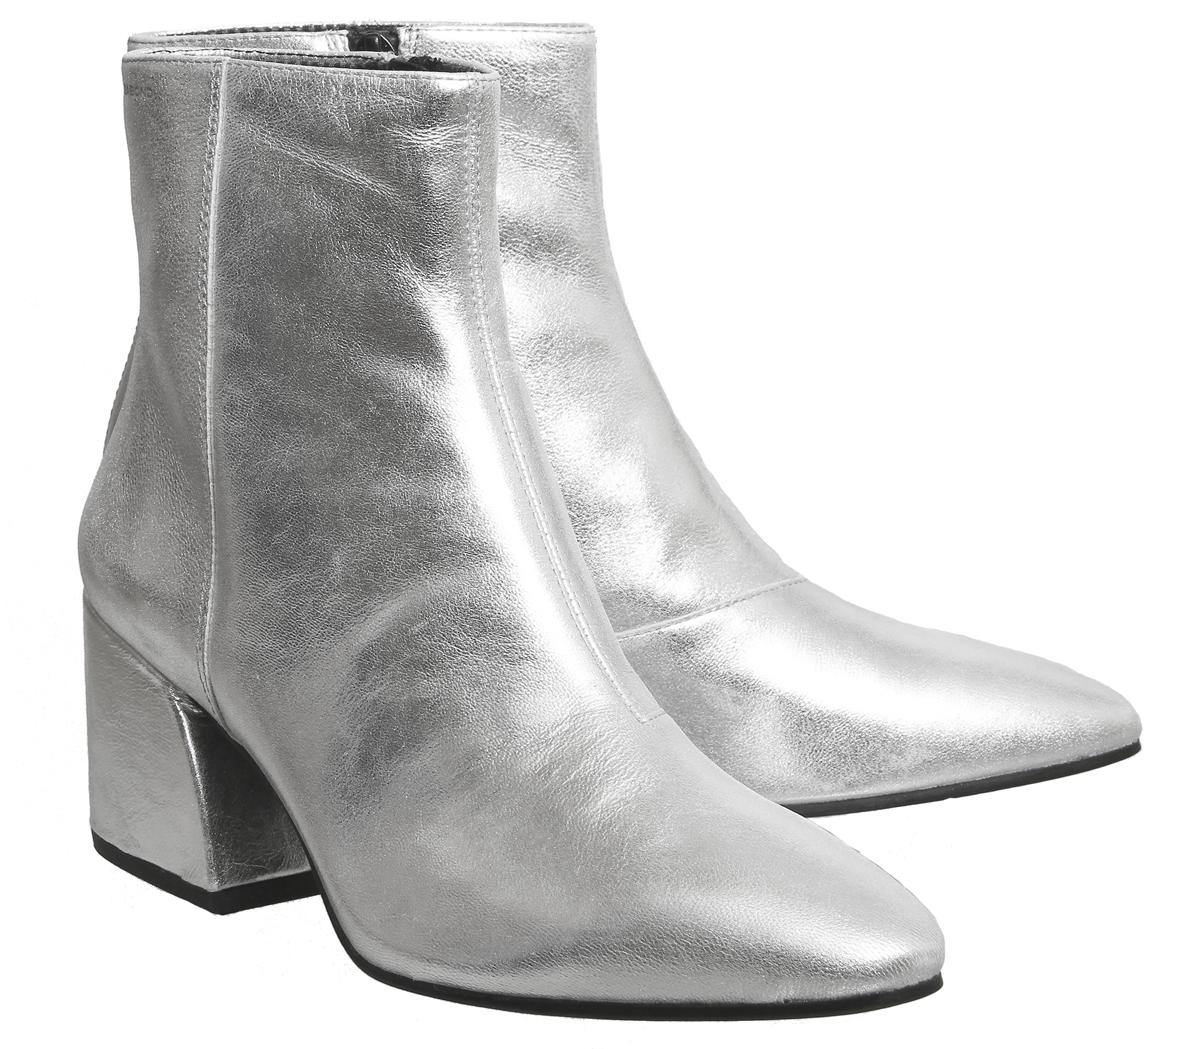 Vagabond Leather Olivia Block Heel Boots in Silver (Metallic) - Lyst